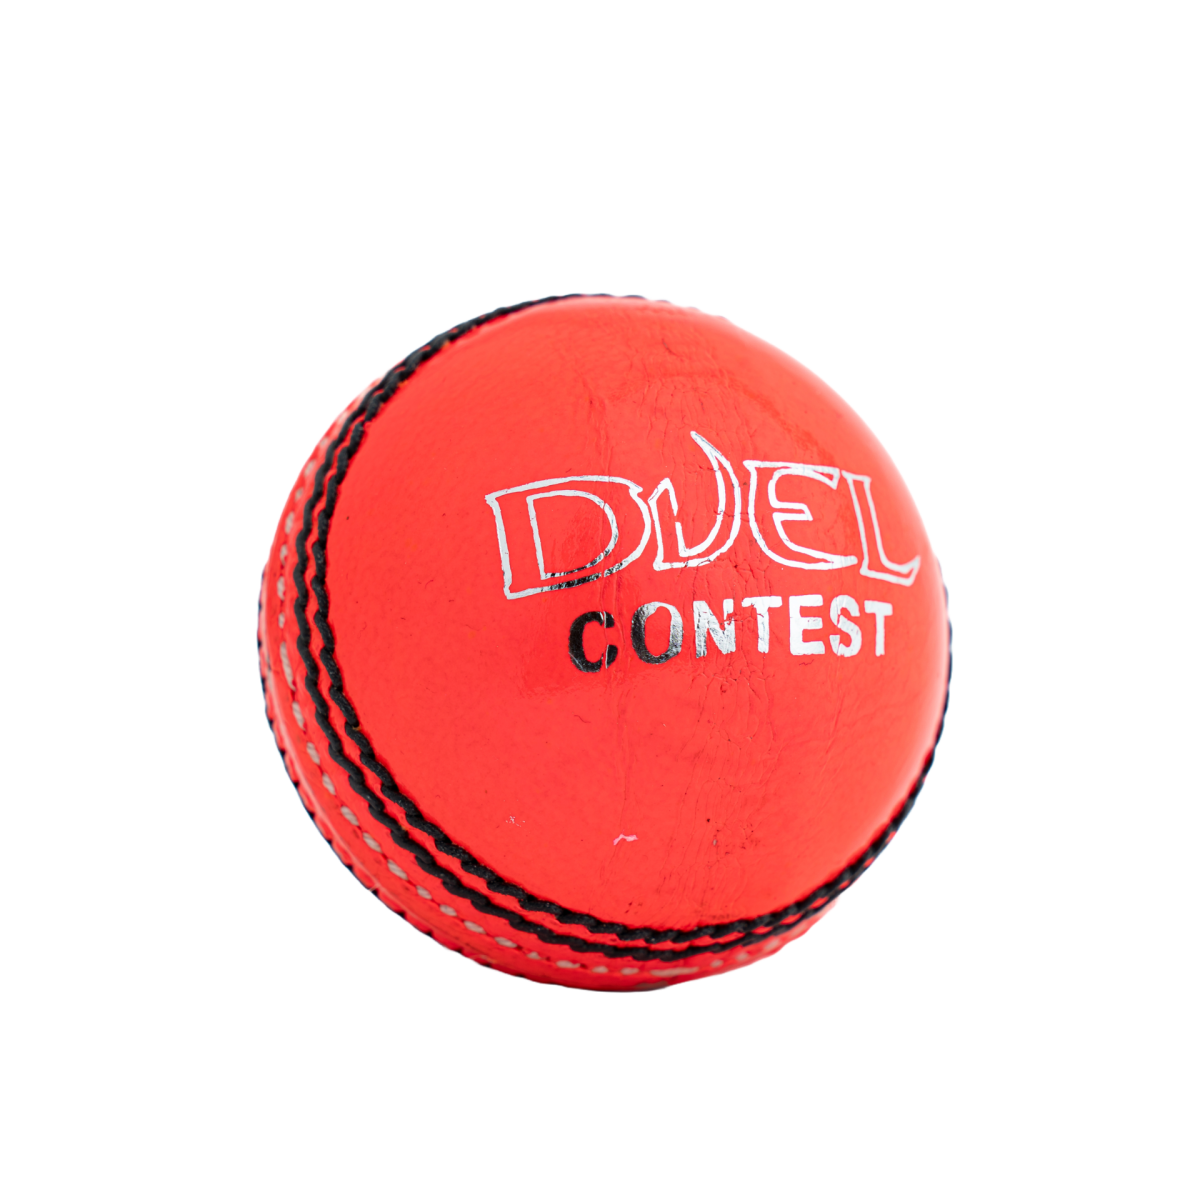 Duel Contest Junior Cricket Ball